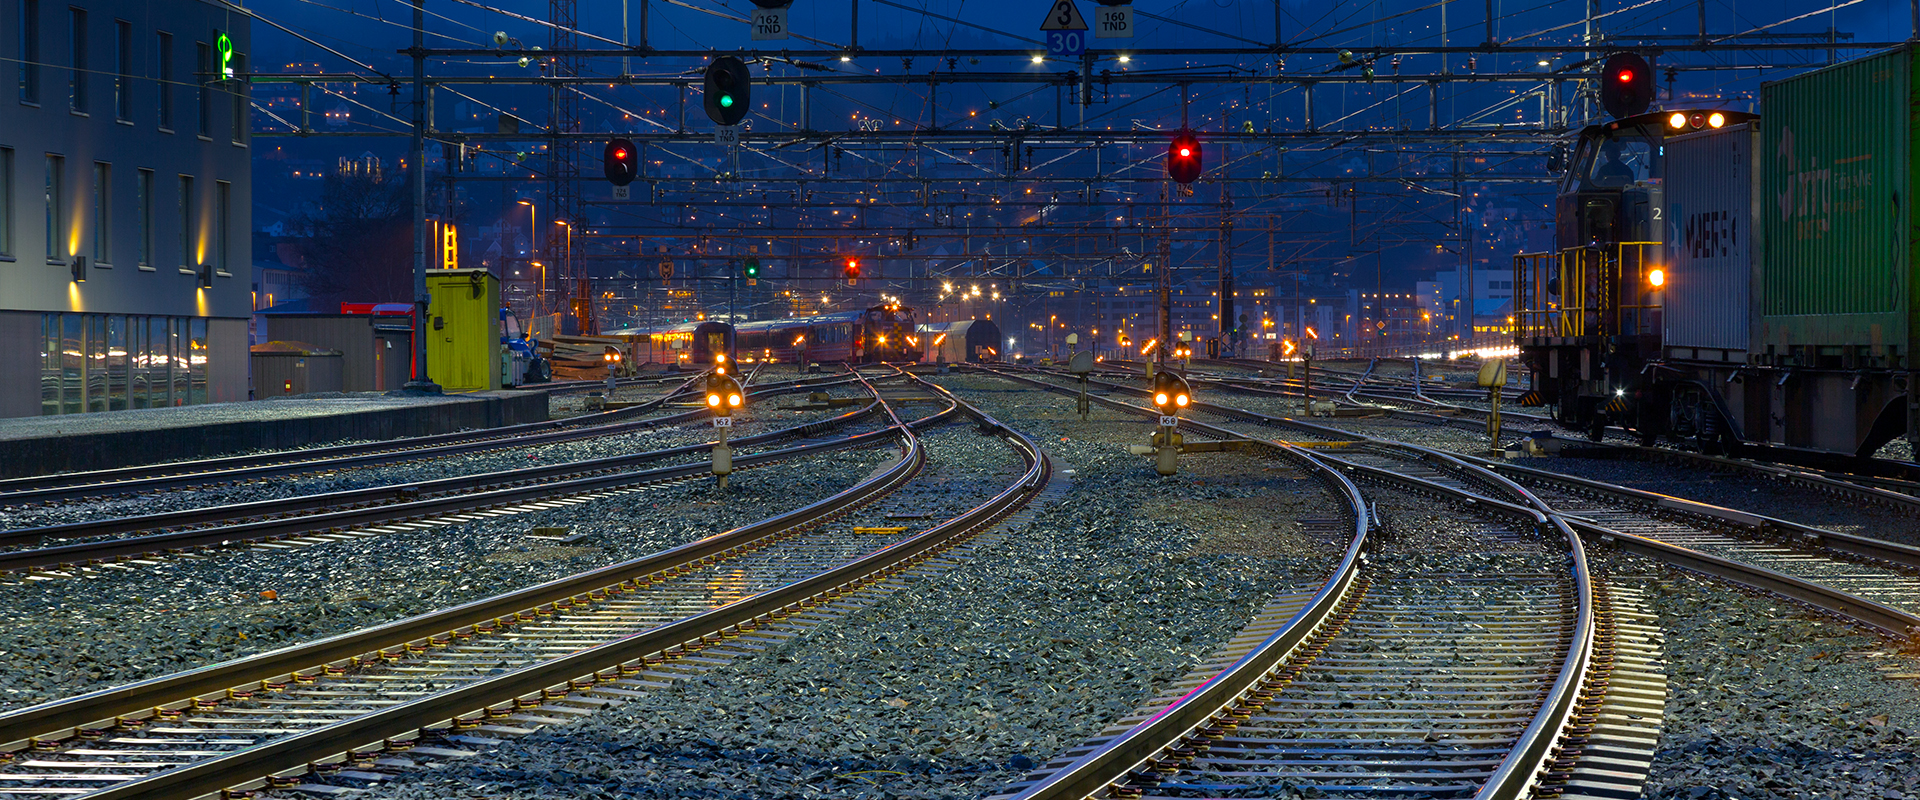 Railway station lighting